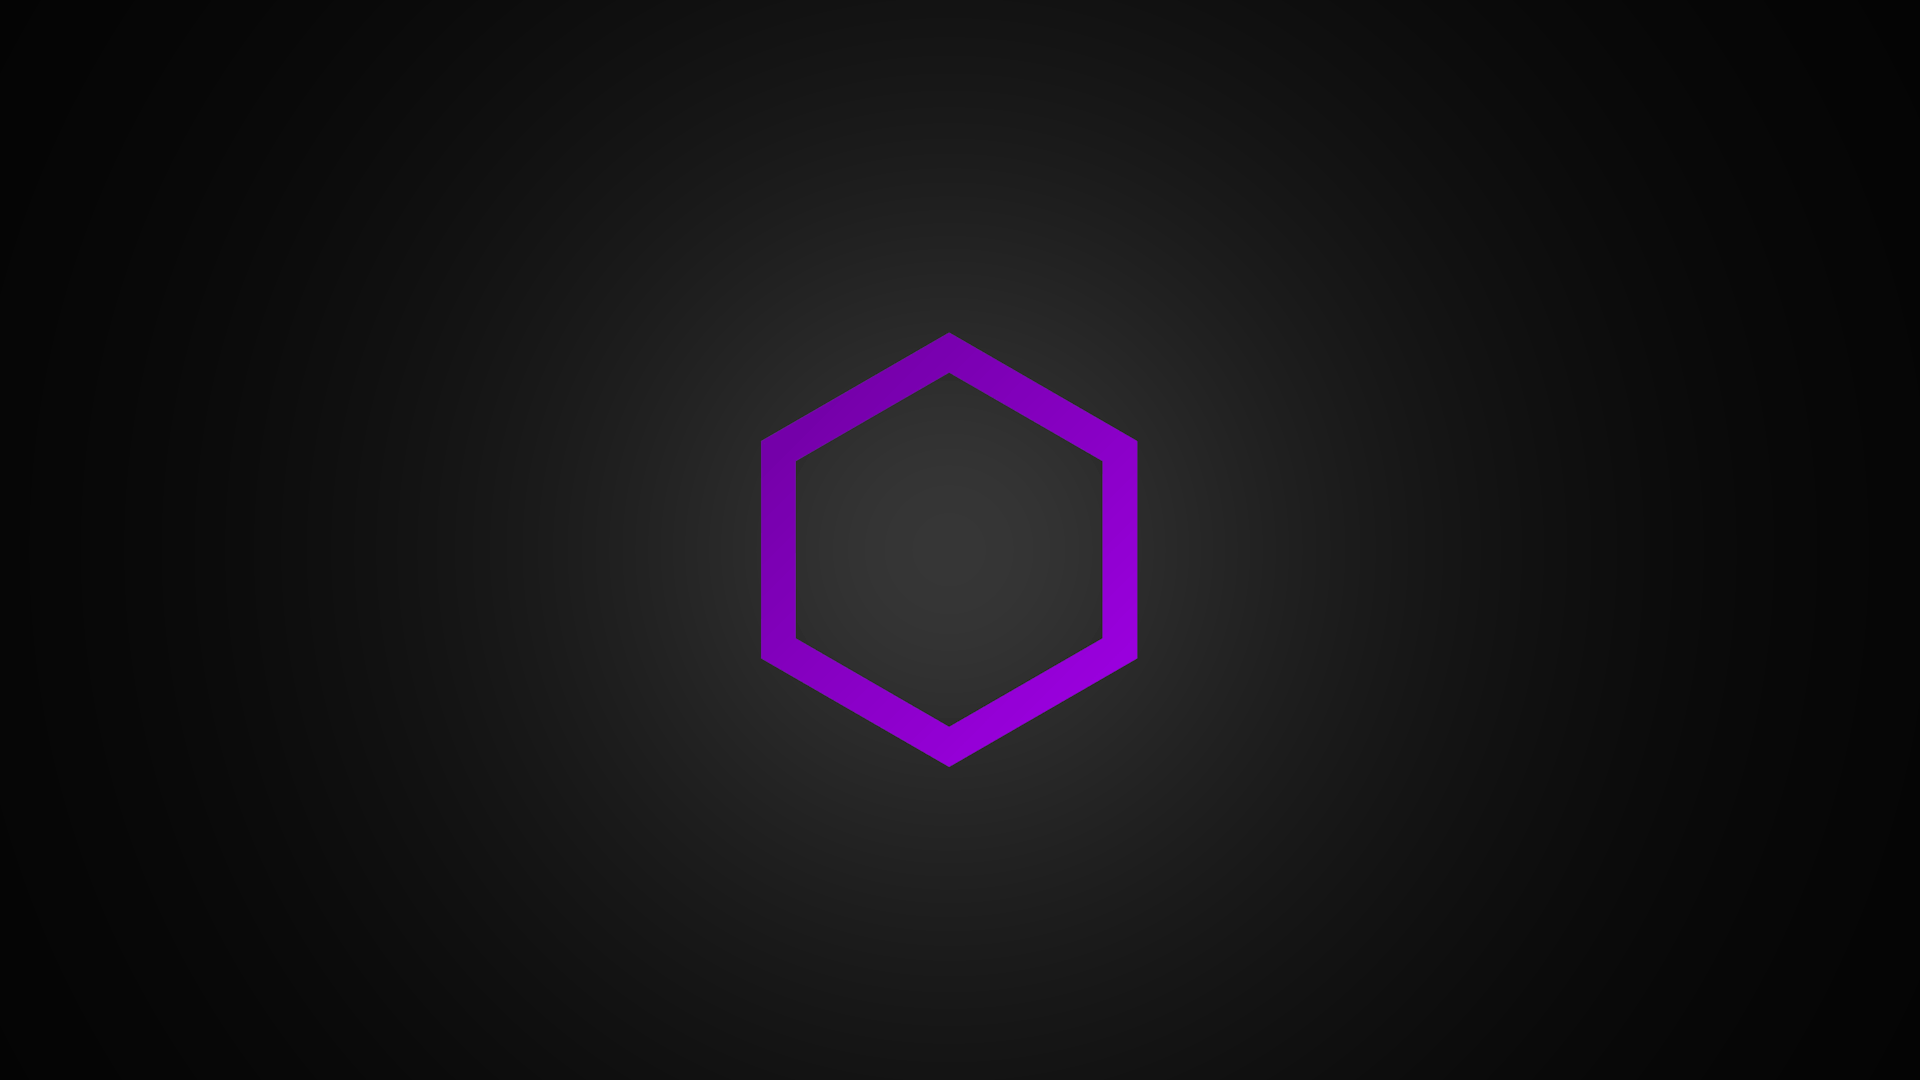 Hexagon Computer Logo - Wallpaper : minimalism, purple, text, logo, symmetry, hexagon